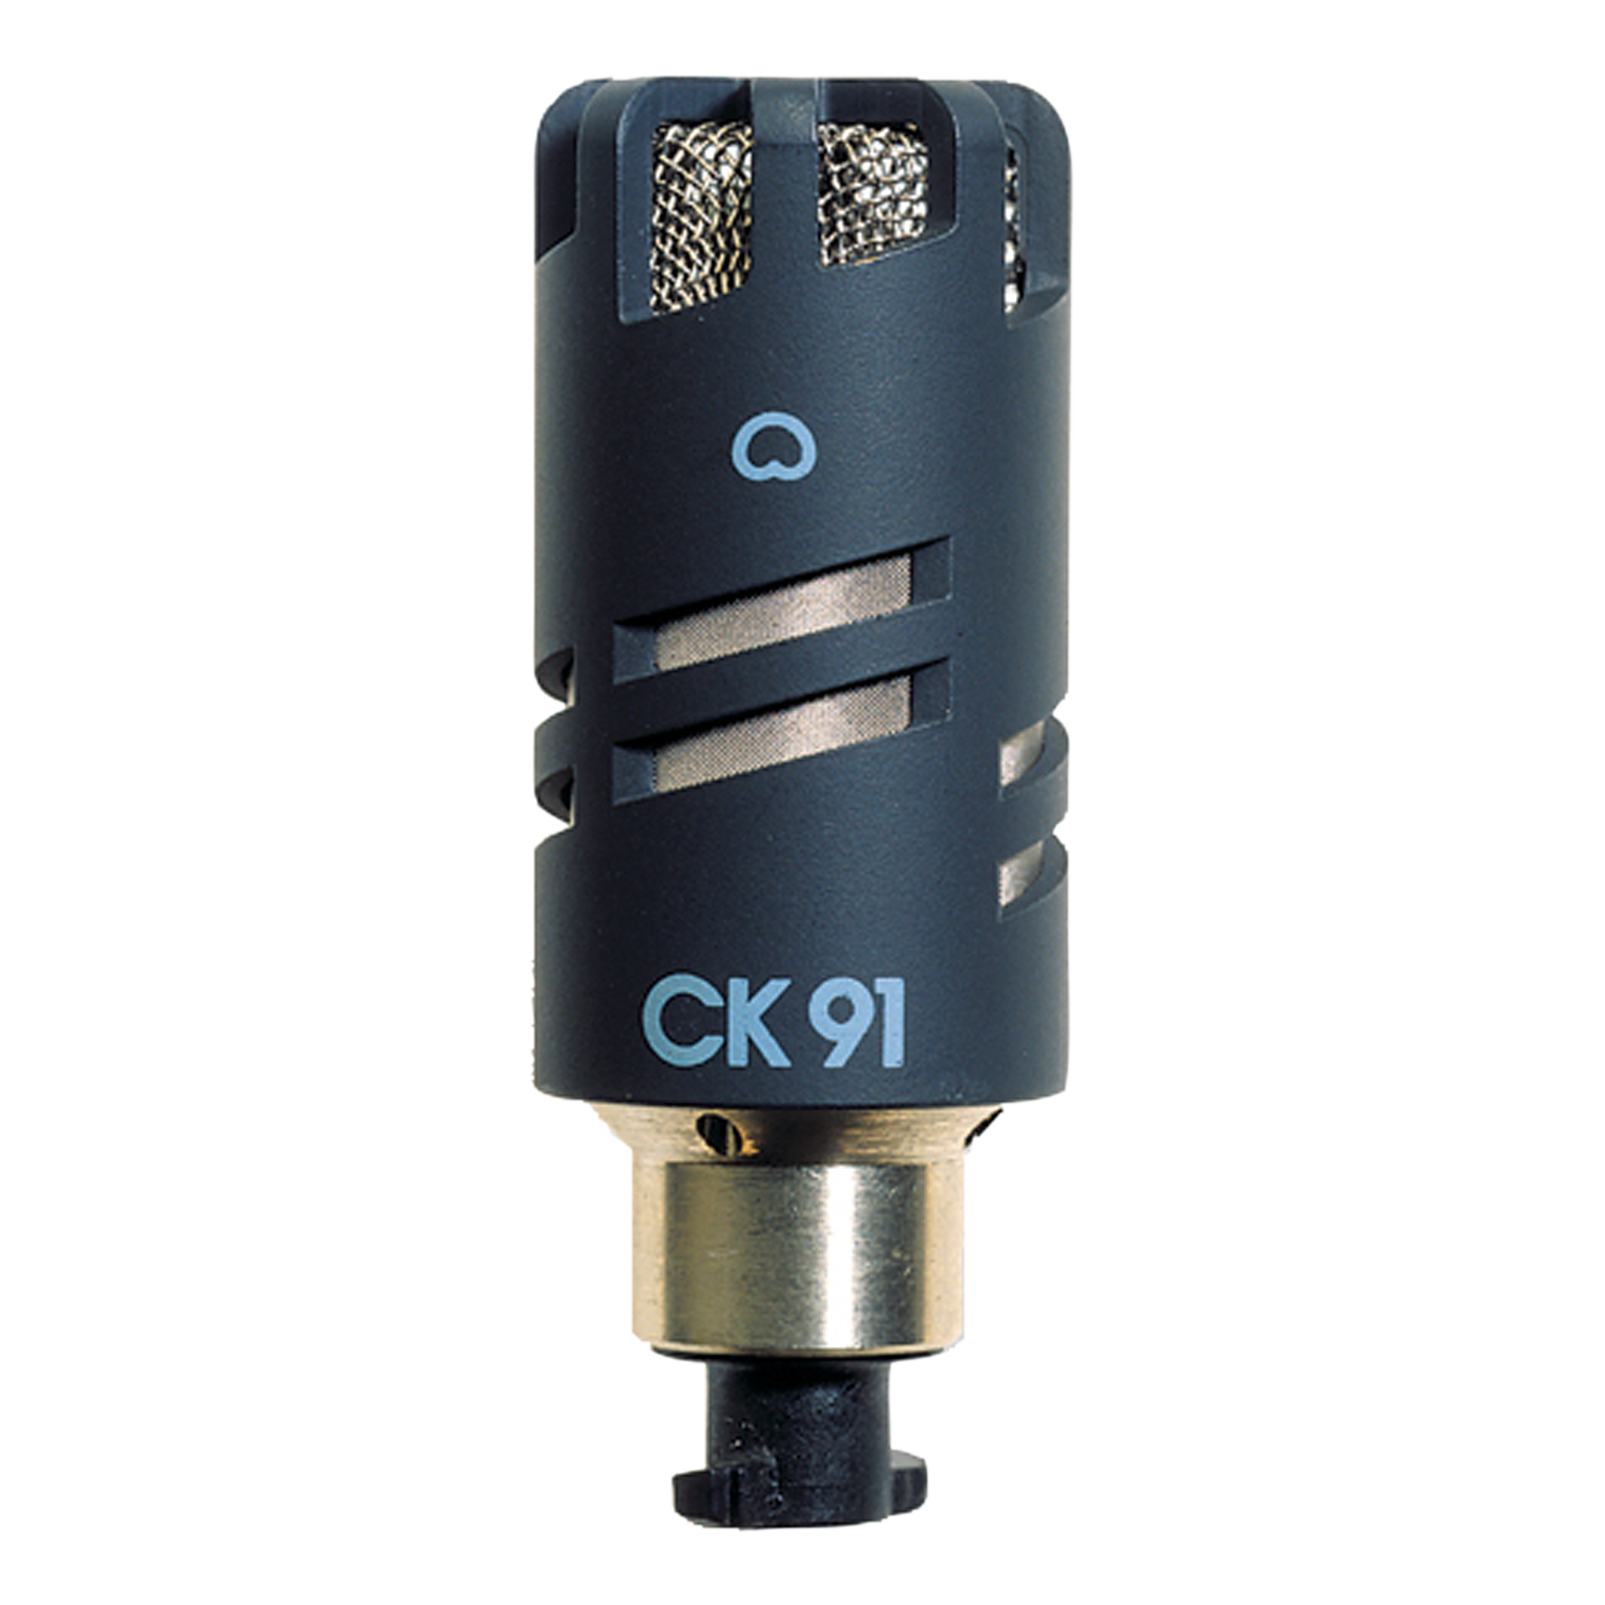 CK91 - Grey - High performance cardioid condenser microphone capsule - Hero